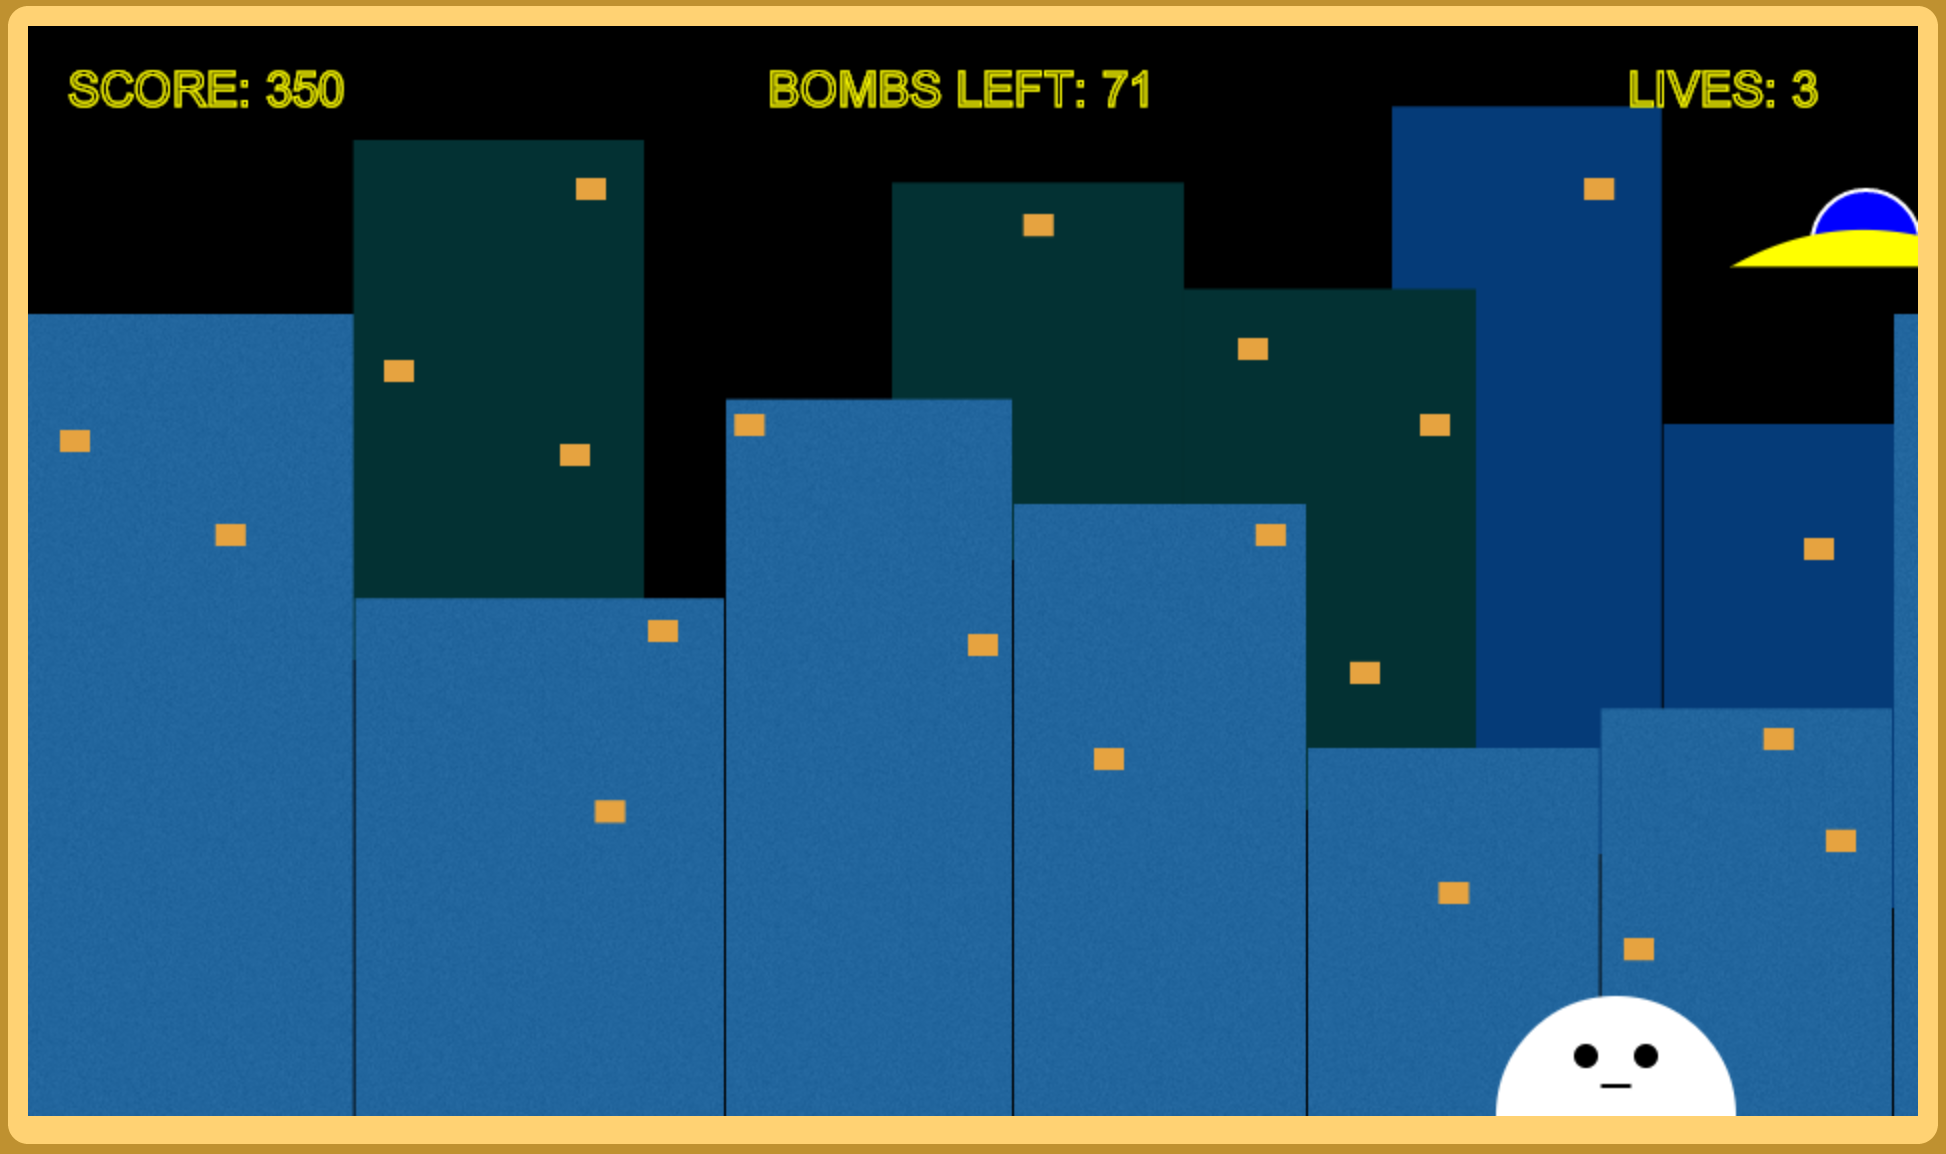 BOTNIK: The benevolent bomber game using JavaScript